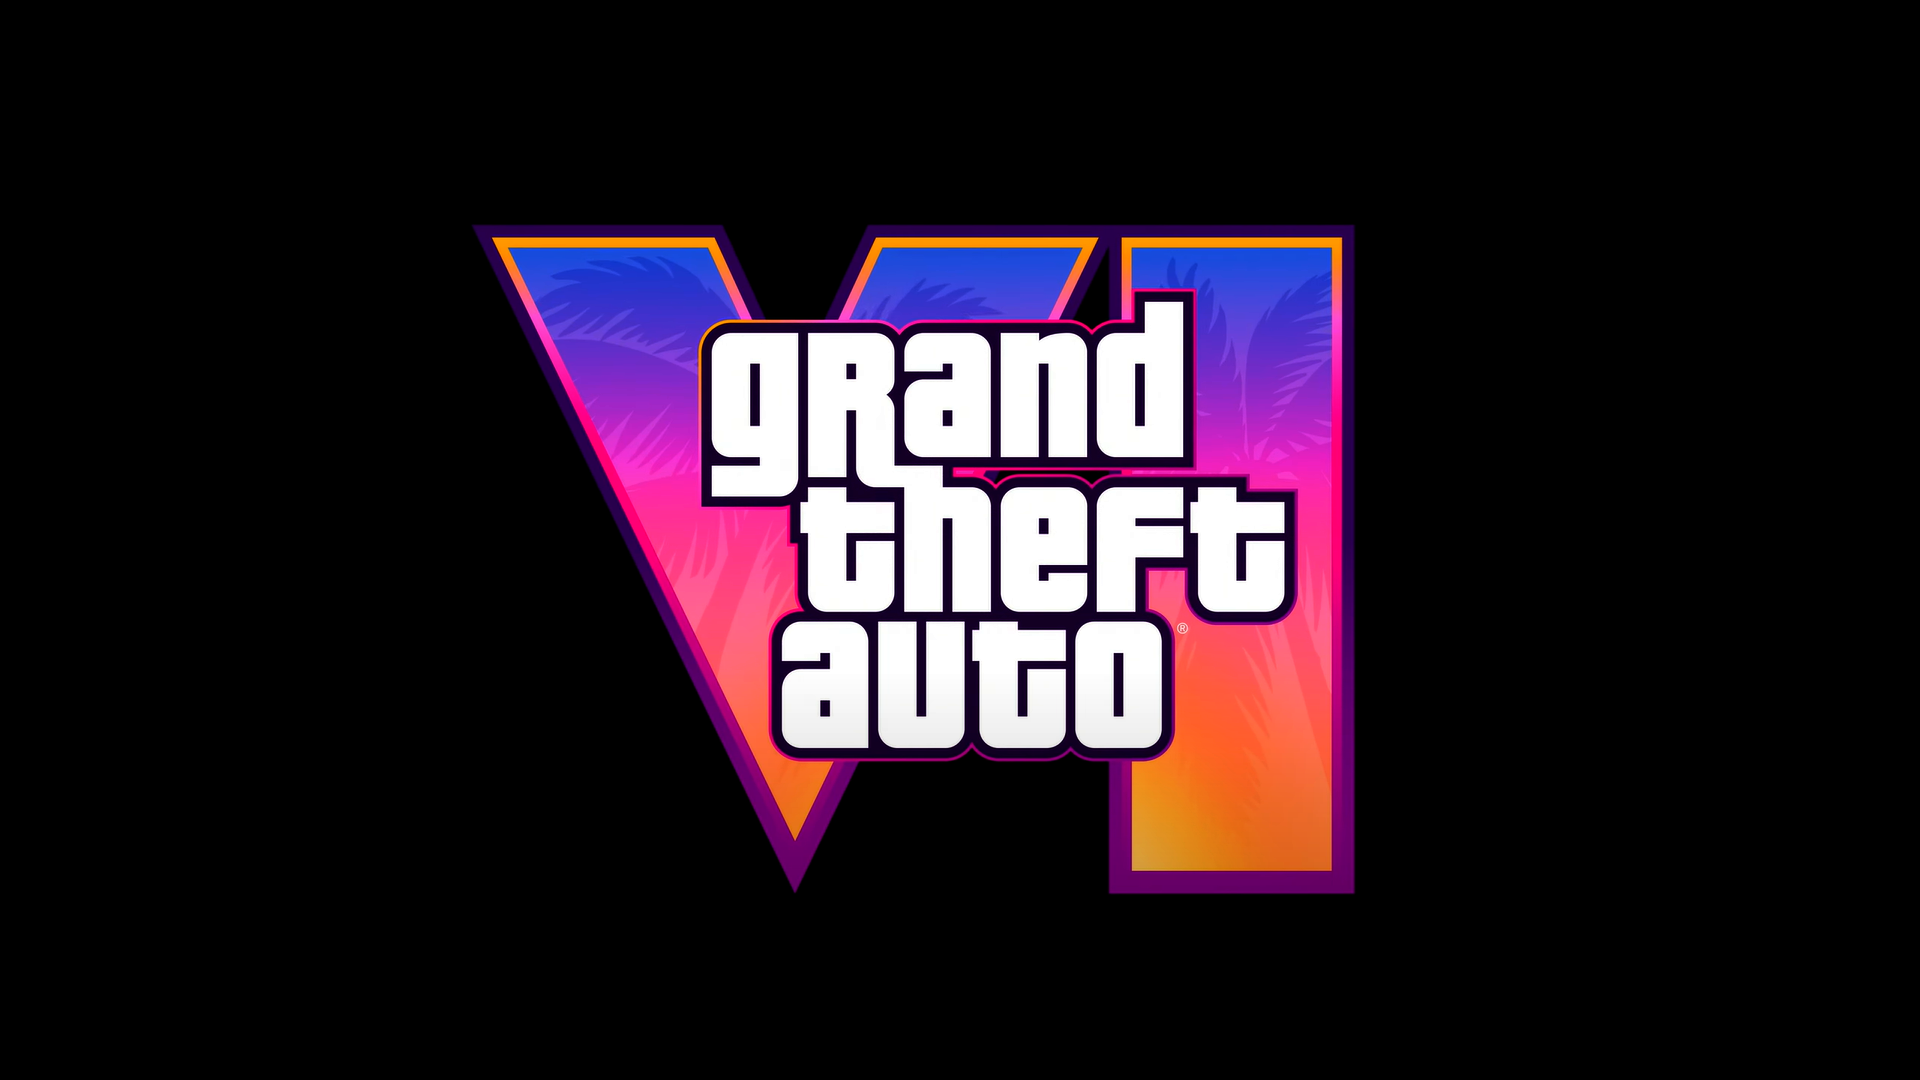 General 1920x1080 Grand Theft Auto VI Rockstar Games Grand Theft Auto simple background title palm trees digital art black background Roman numerals minimalism video games logo